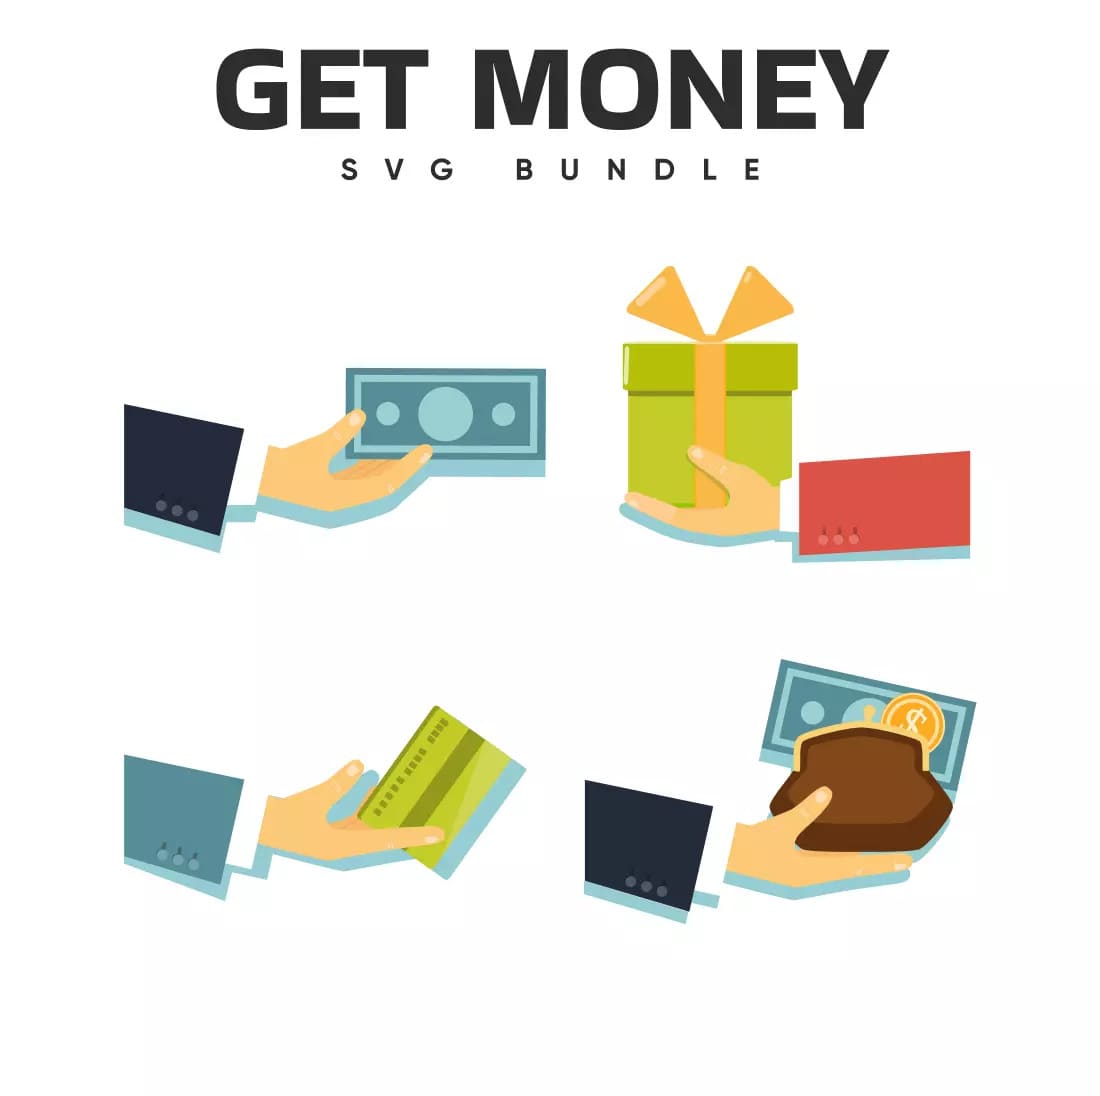 Get Money SVG Bundle Preview.